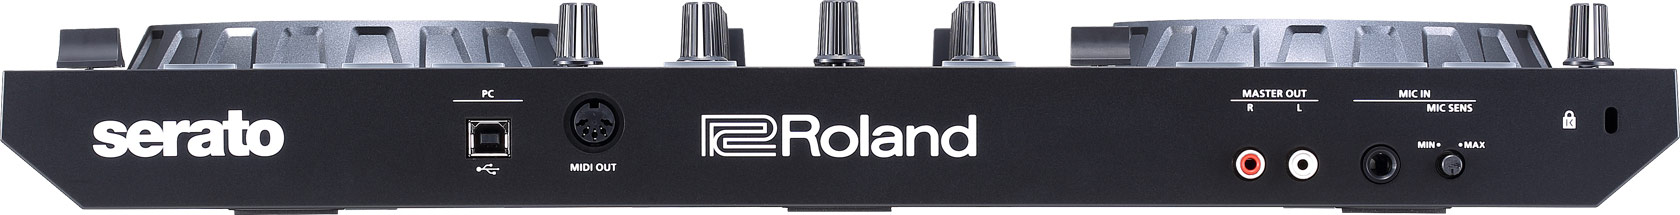 Roland Dj-202 - USB DJ controller - Variation 7